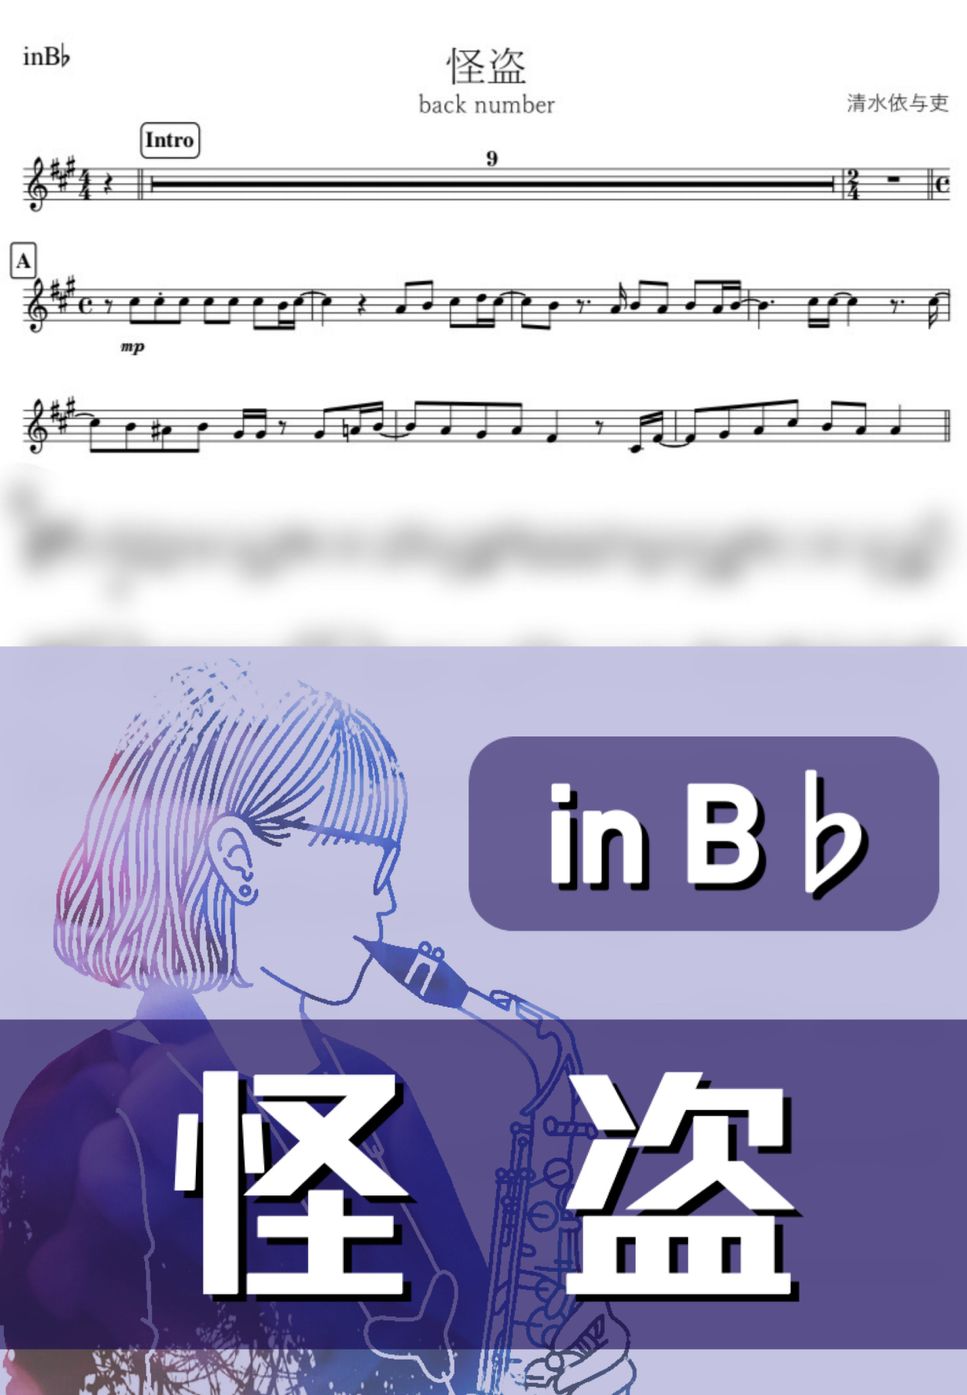 back number - 怪盗 (B♭) by kanamusic